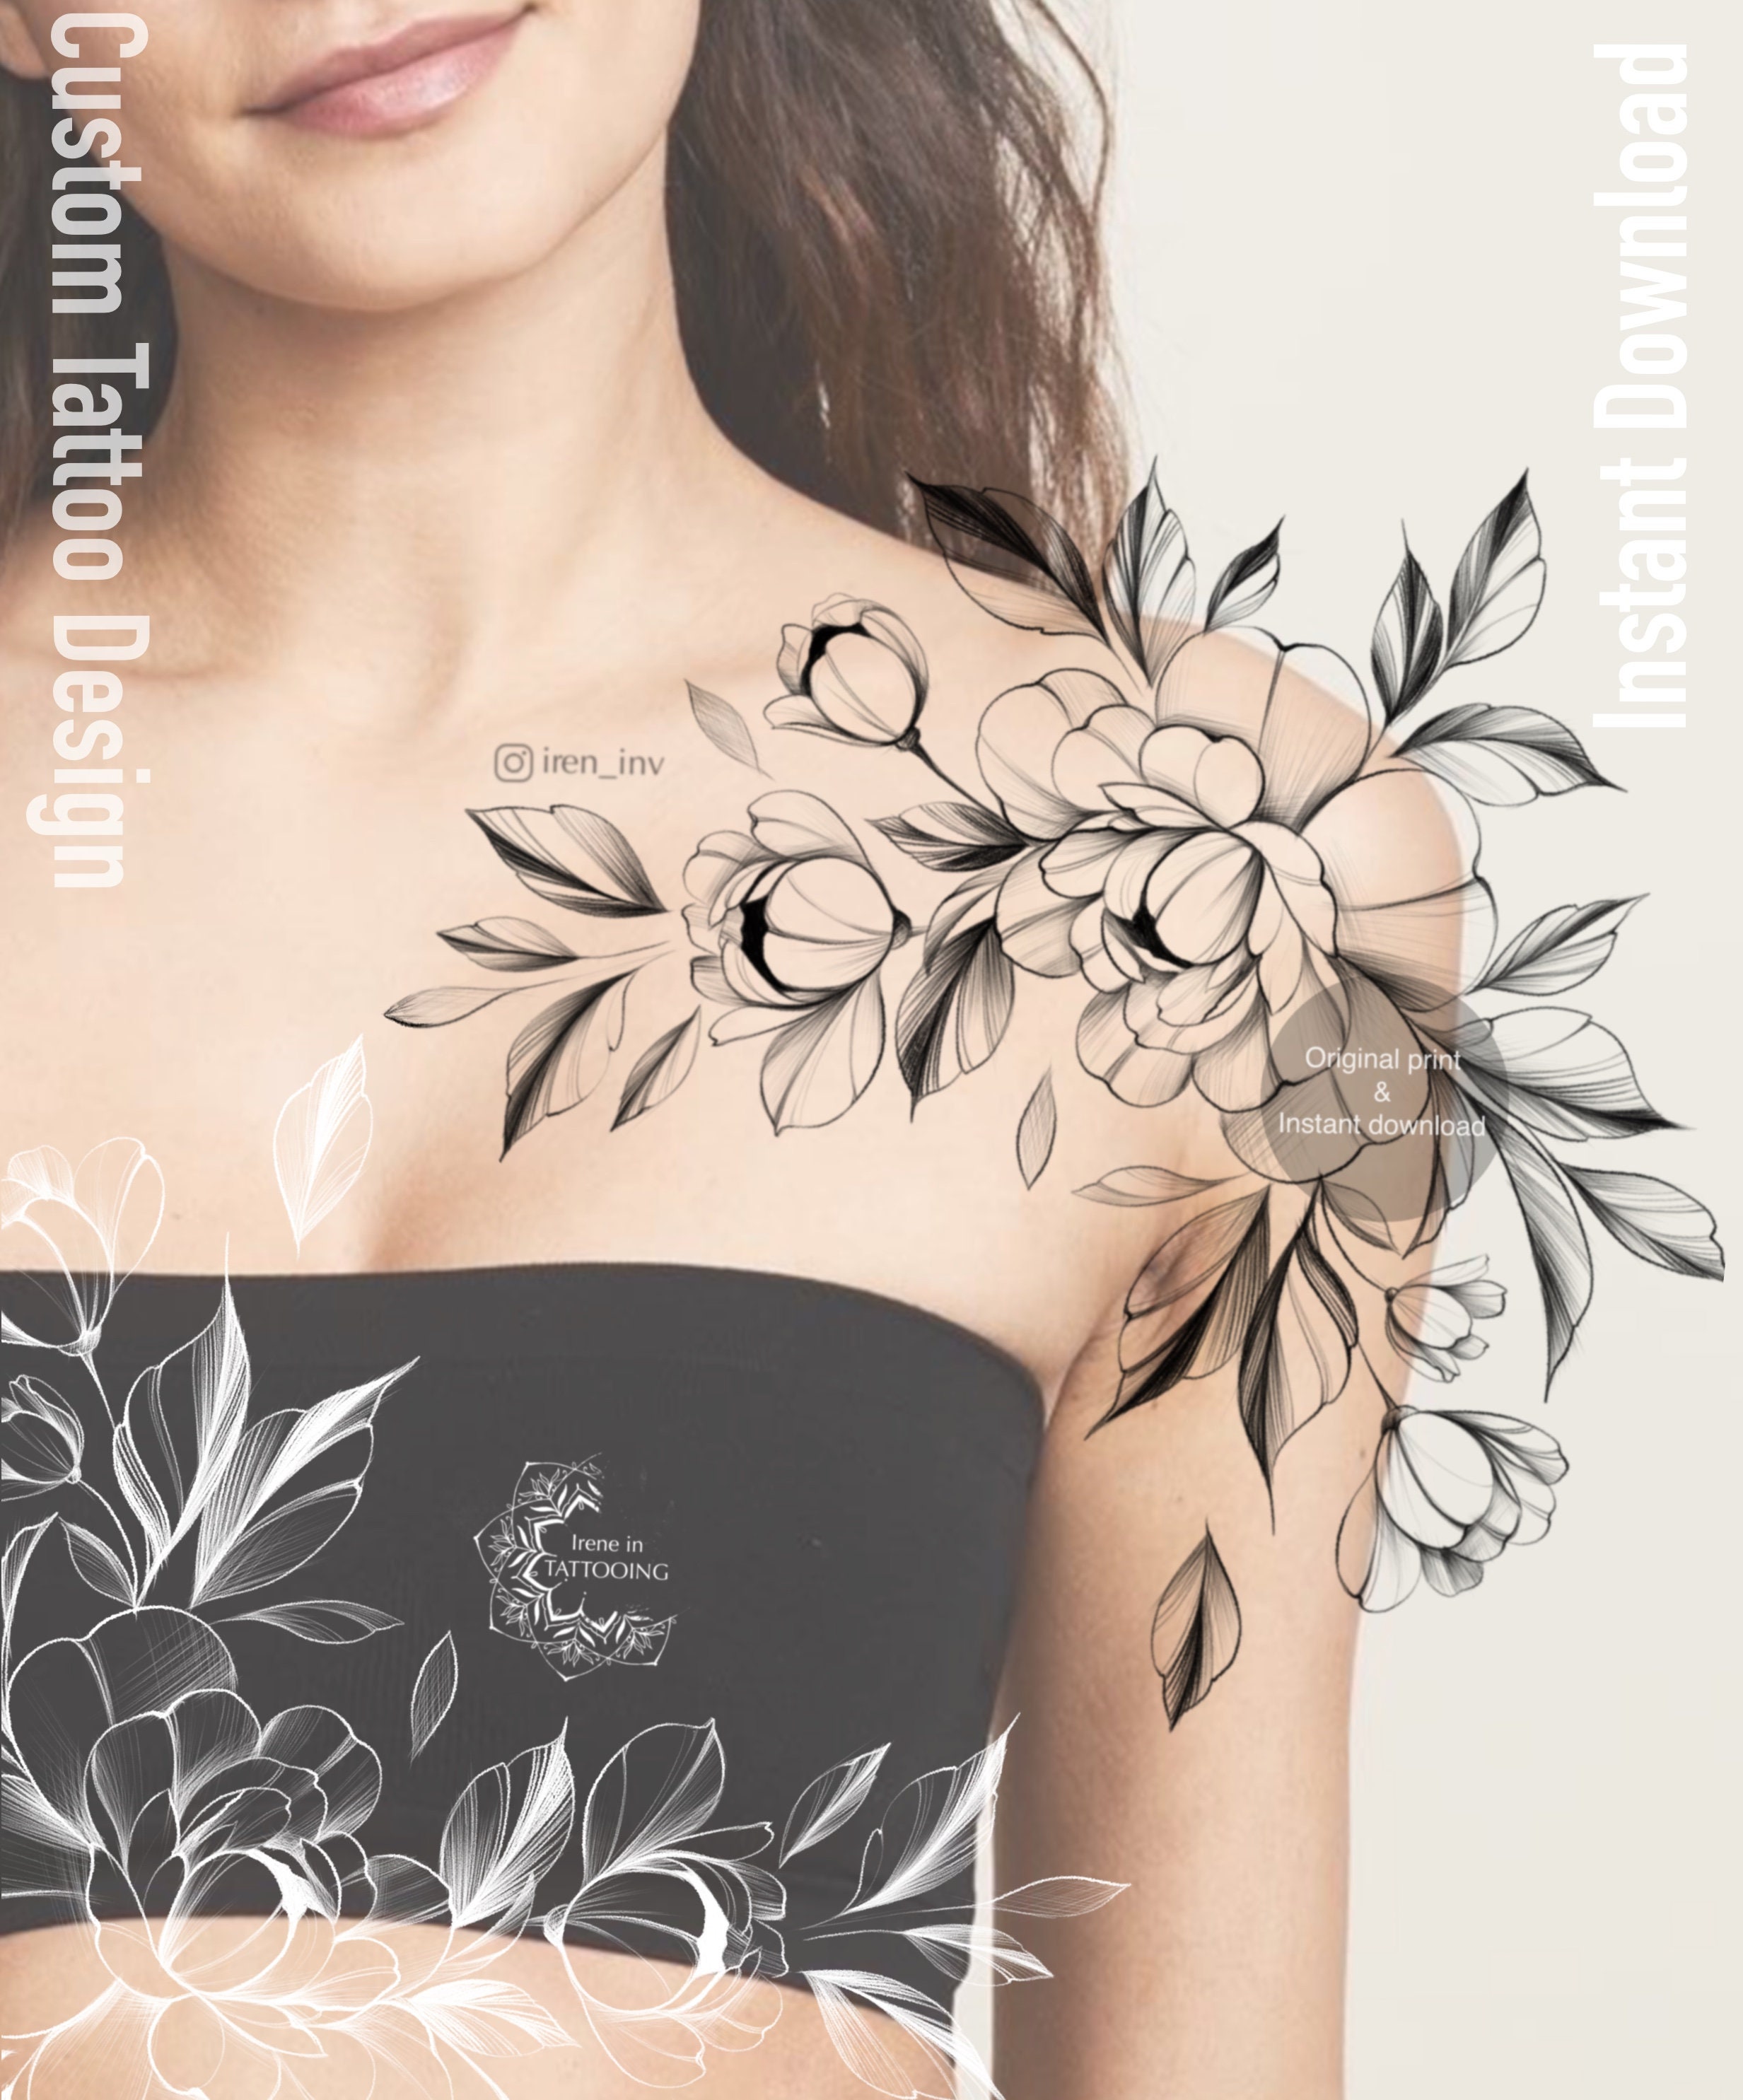 The Canvas Arts Temporary Tattoo Waterproof For Women Wrist Arm Hand  Legs HB346X Flowers Tattoo Size 21X15 cm  Amazonin Beauty